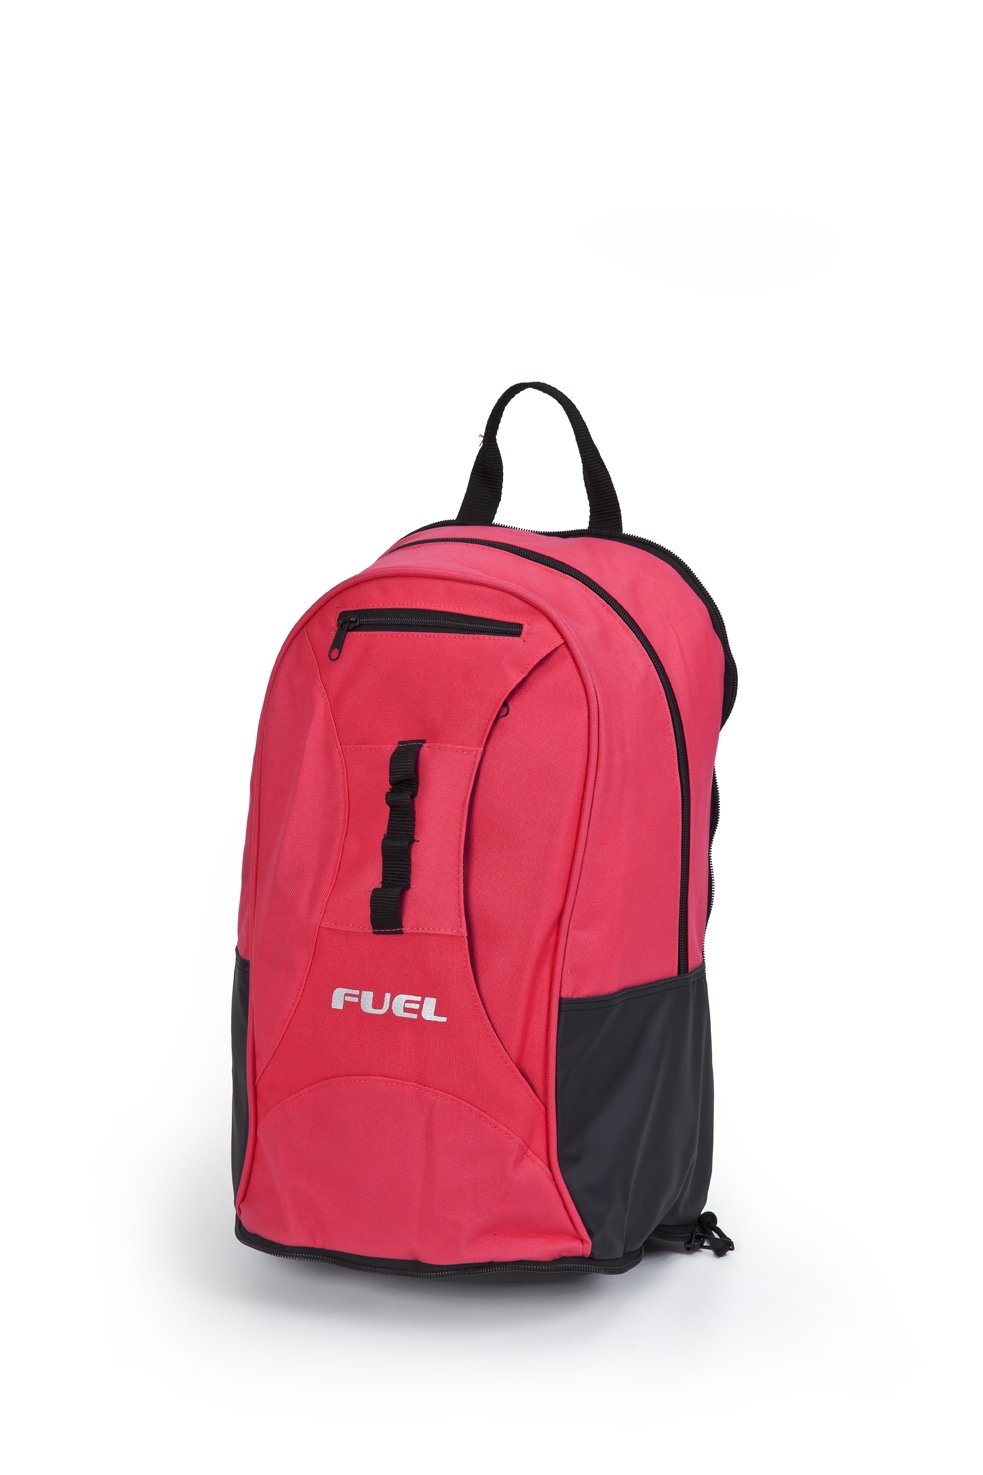 FUEL Ruck Sack MK2 - Fuel Sports